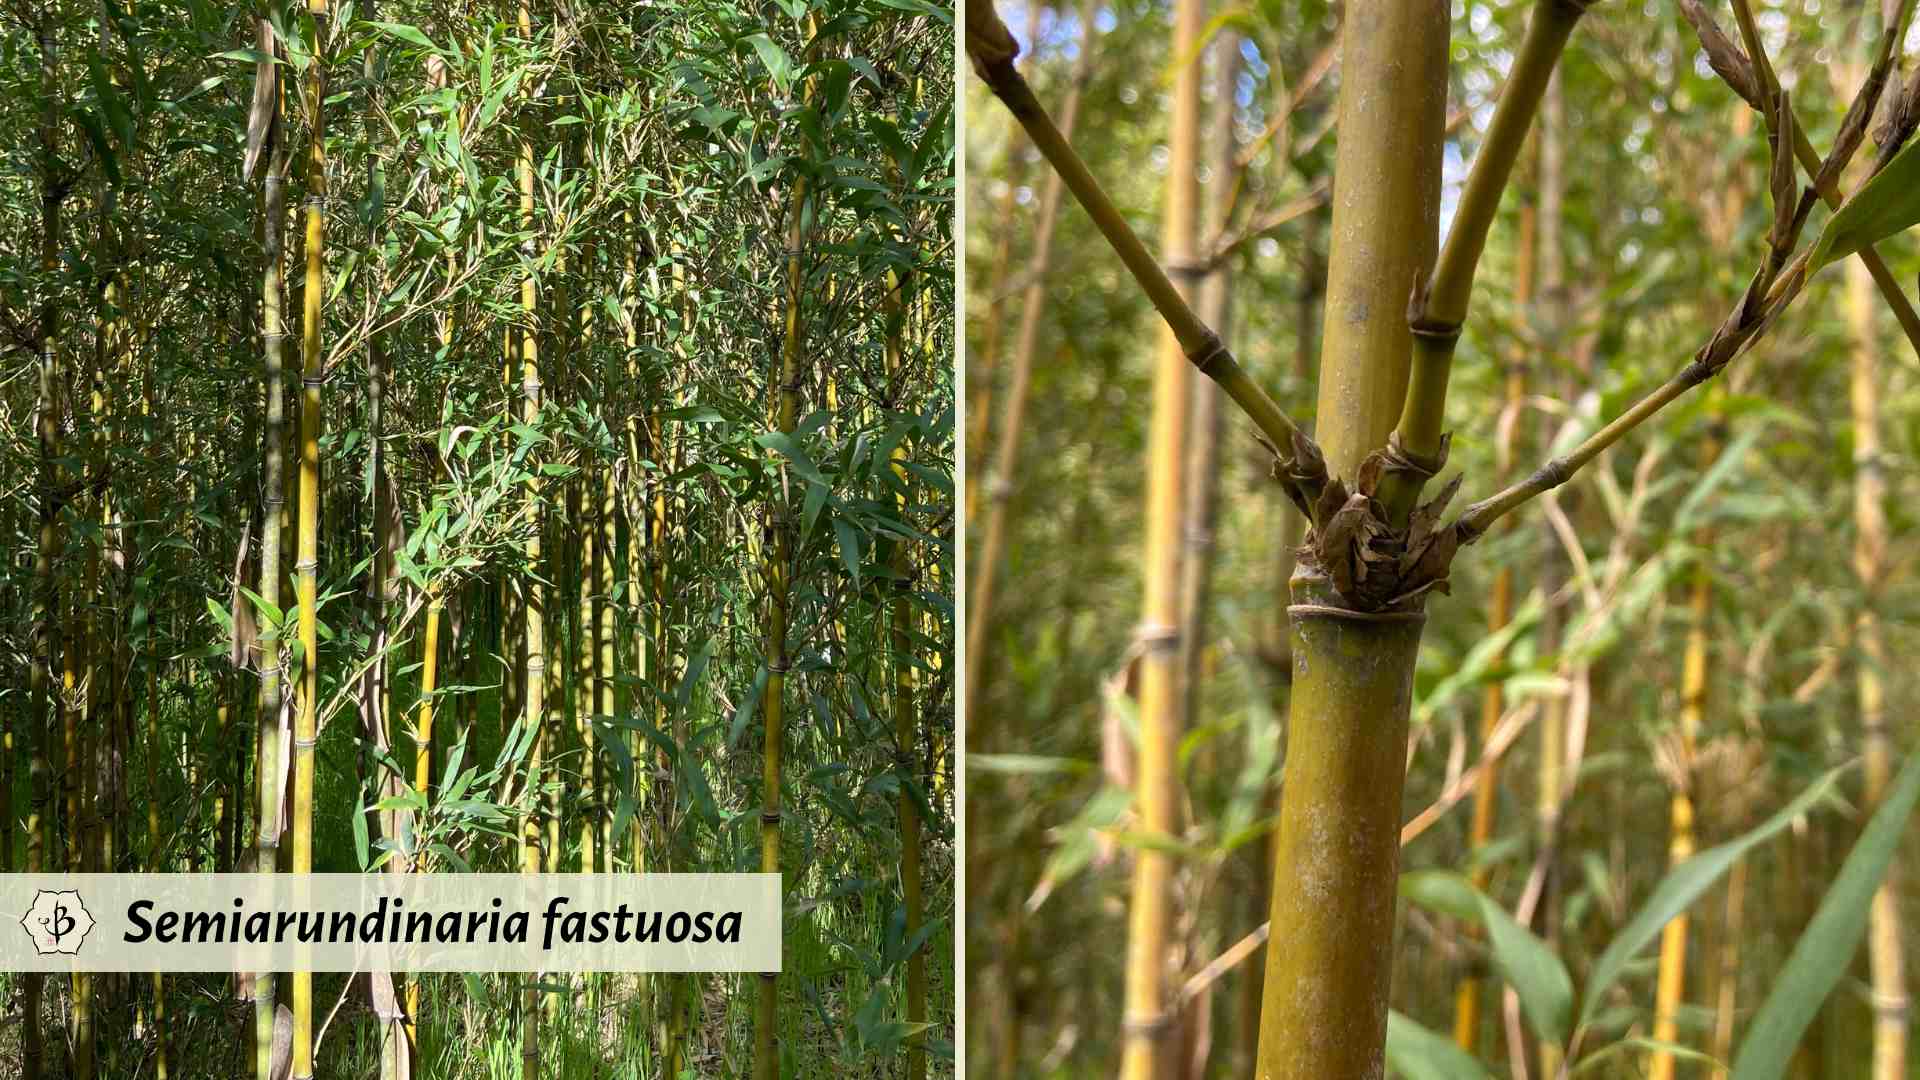 Semiarundinaria fastuosa temple bamboo features